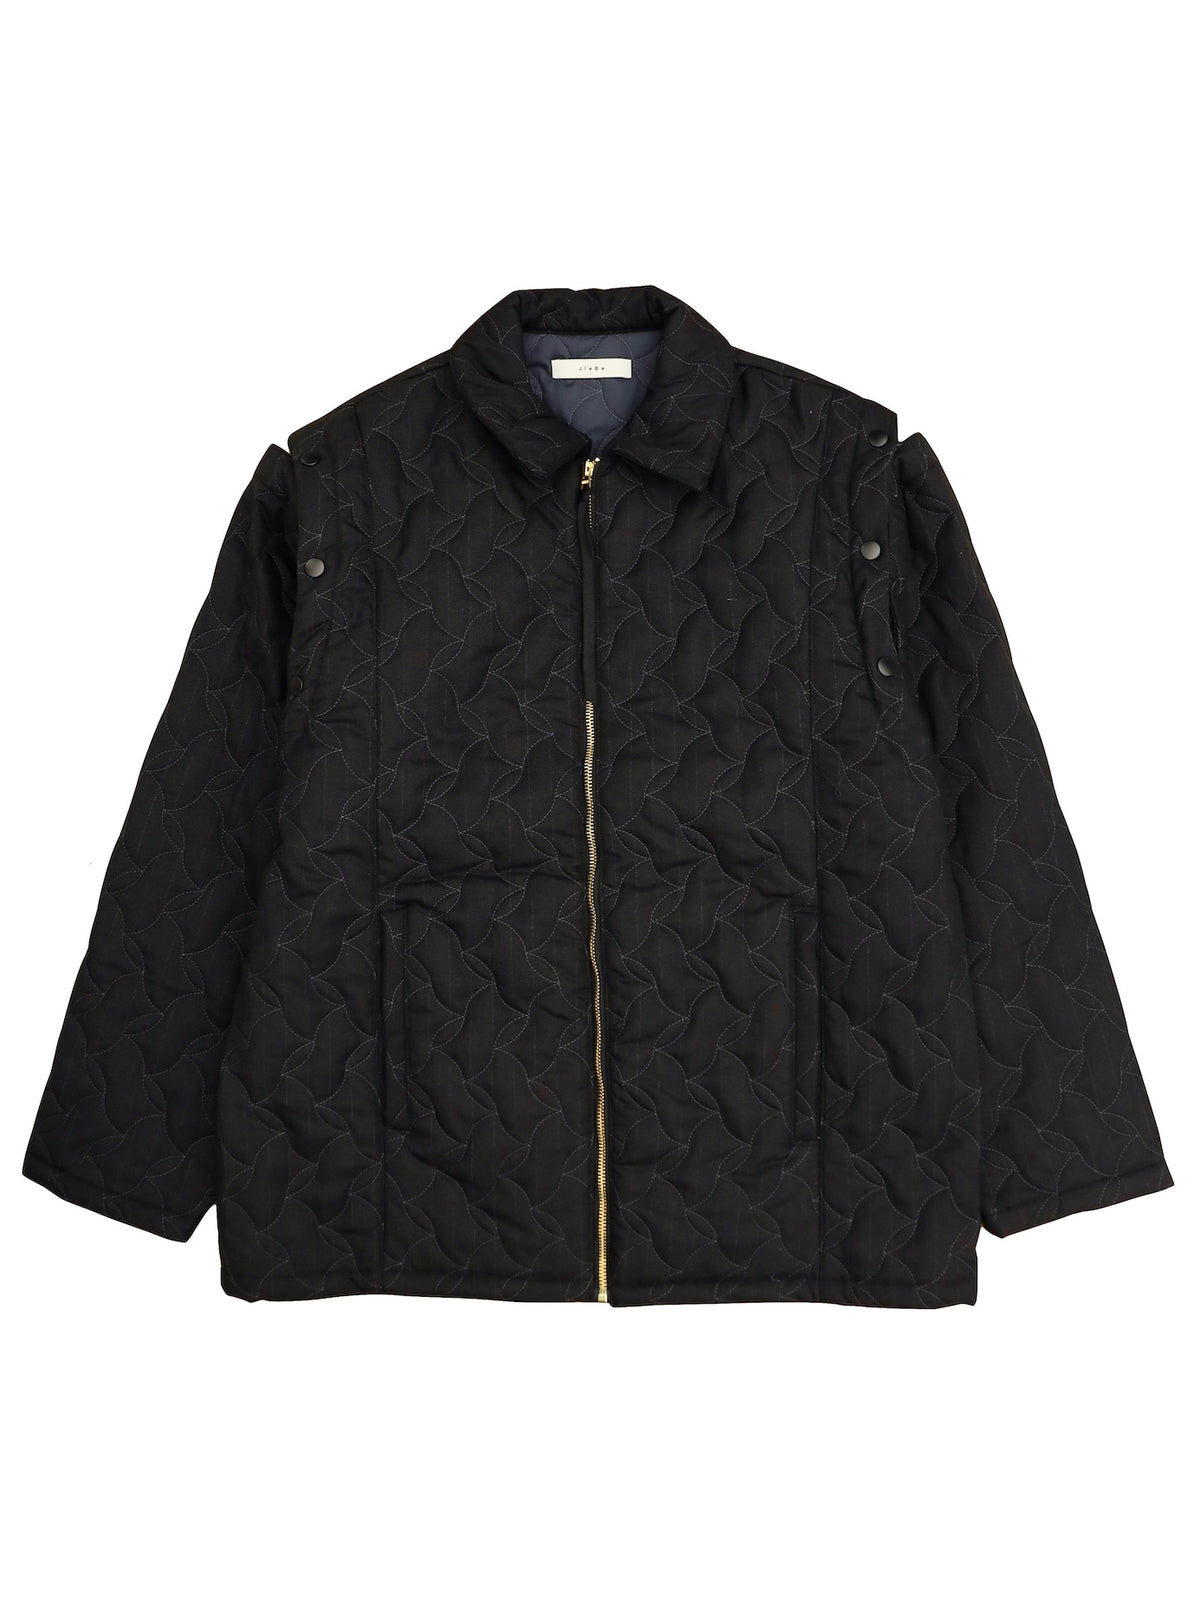 YOEL】2way quilting jacket チャコールグレー身幅77cm - ブルゾン